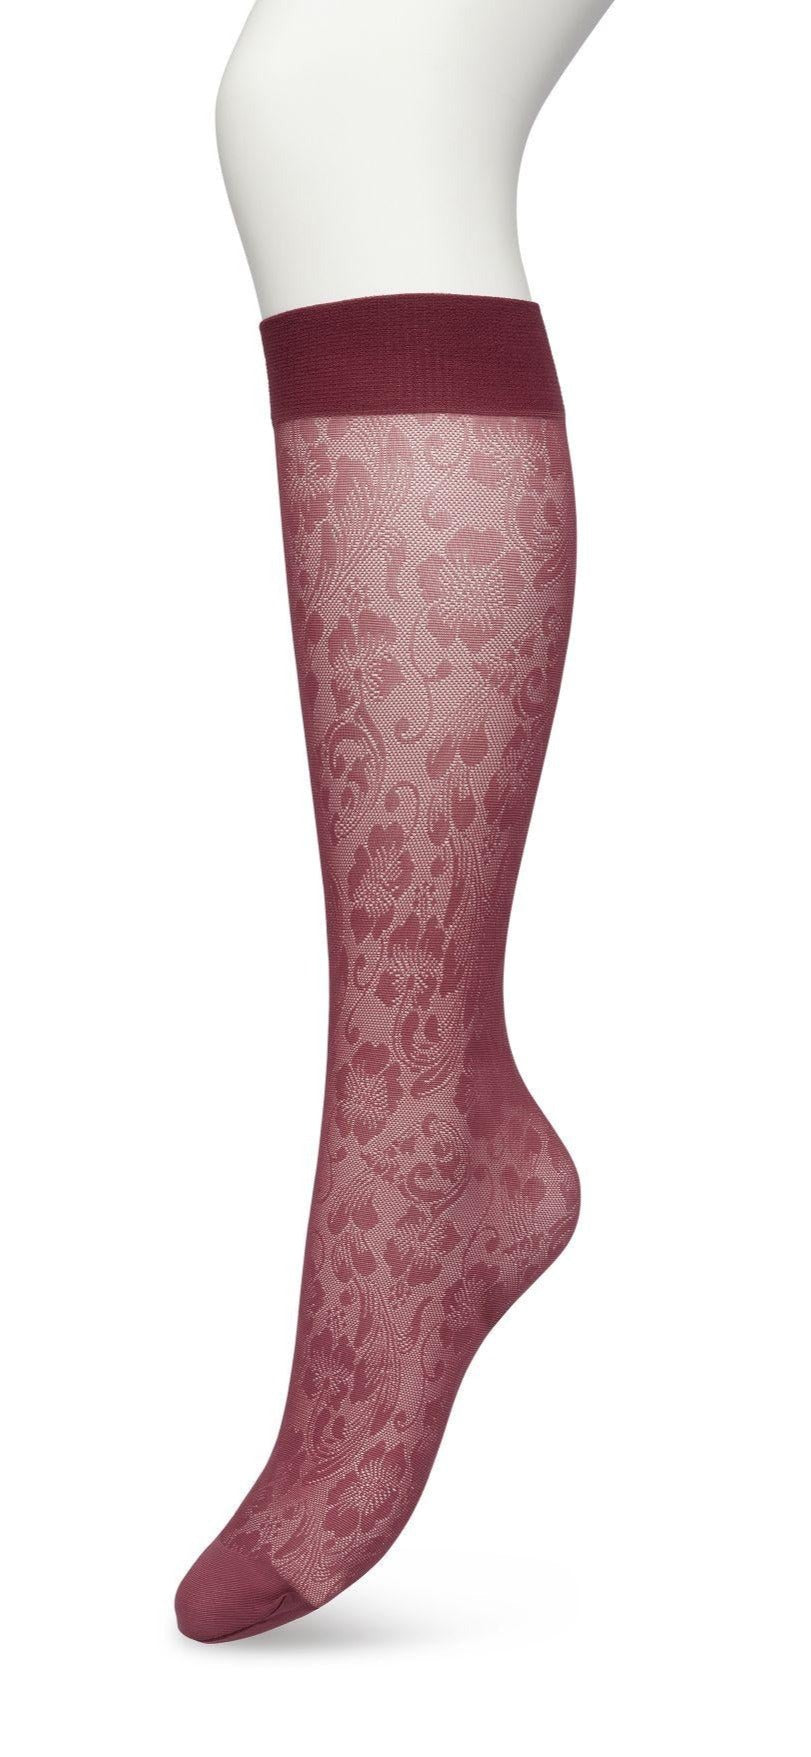 Bonnie Doon BP221803 Fancy Flowers Knee-Highs - Semi-sheer floral lace style patterned knee-high socks in wine (crushed violet)